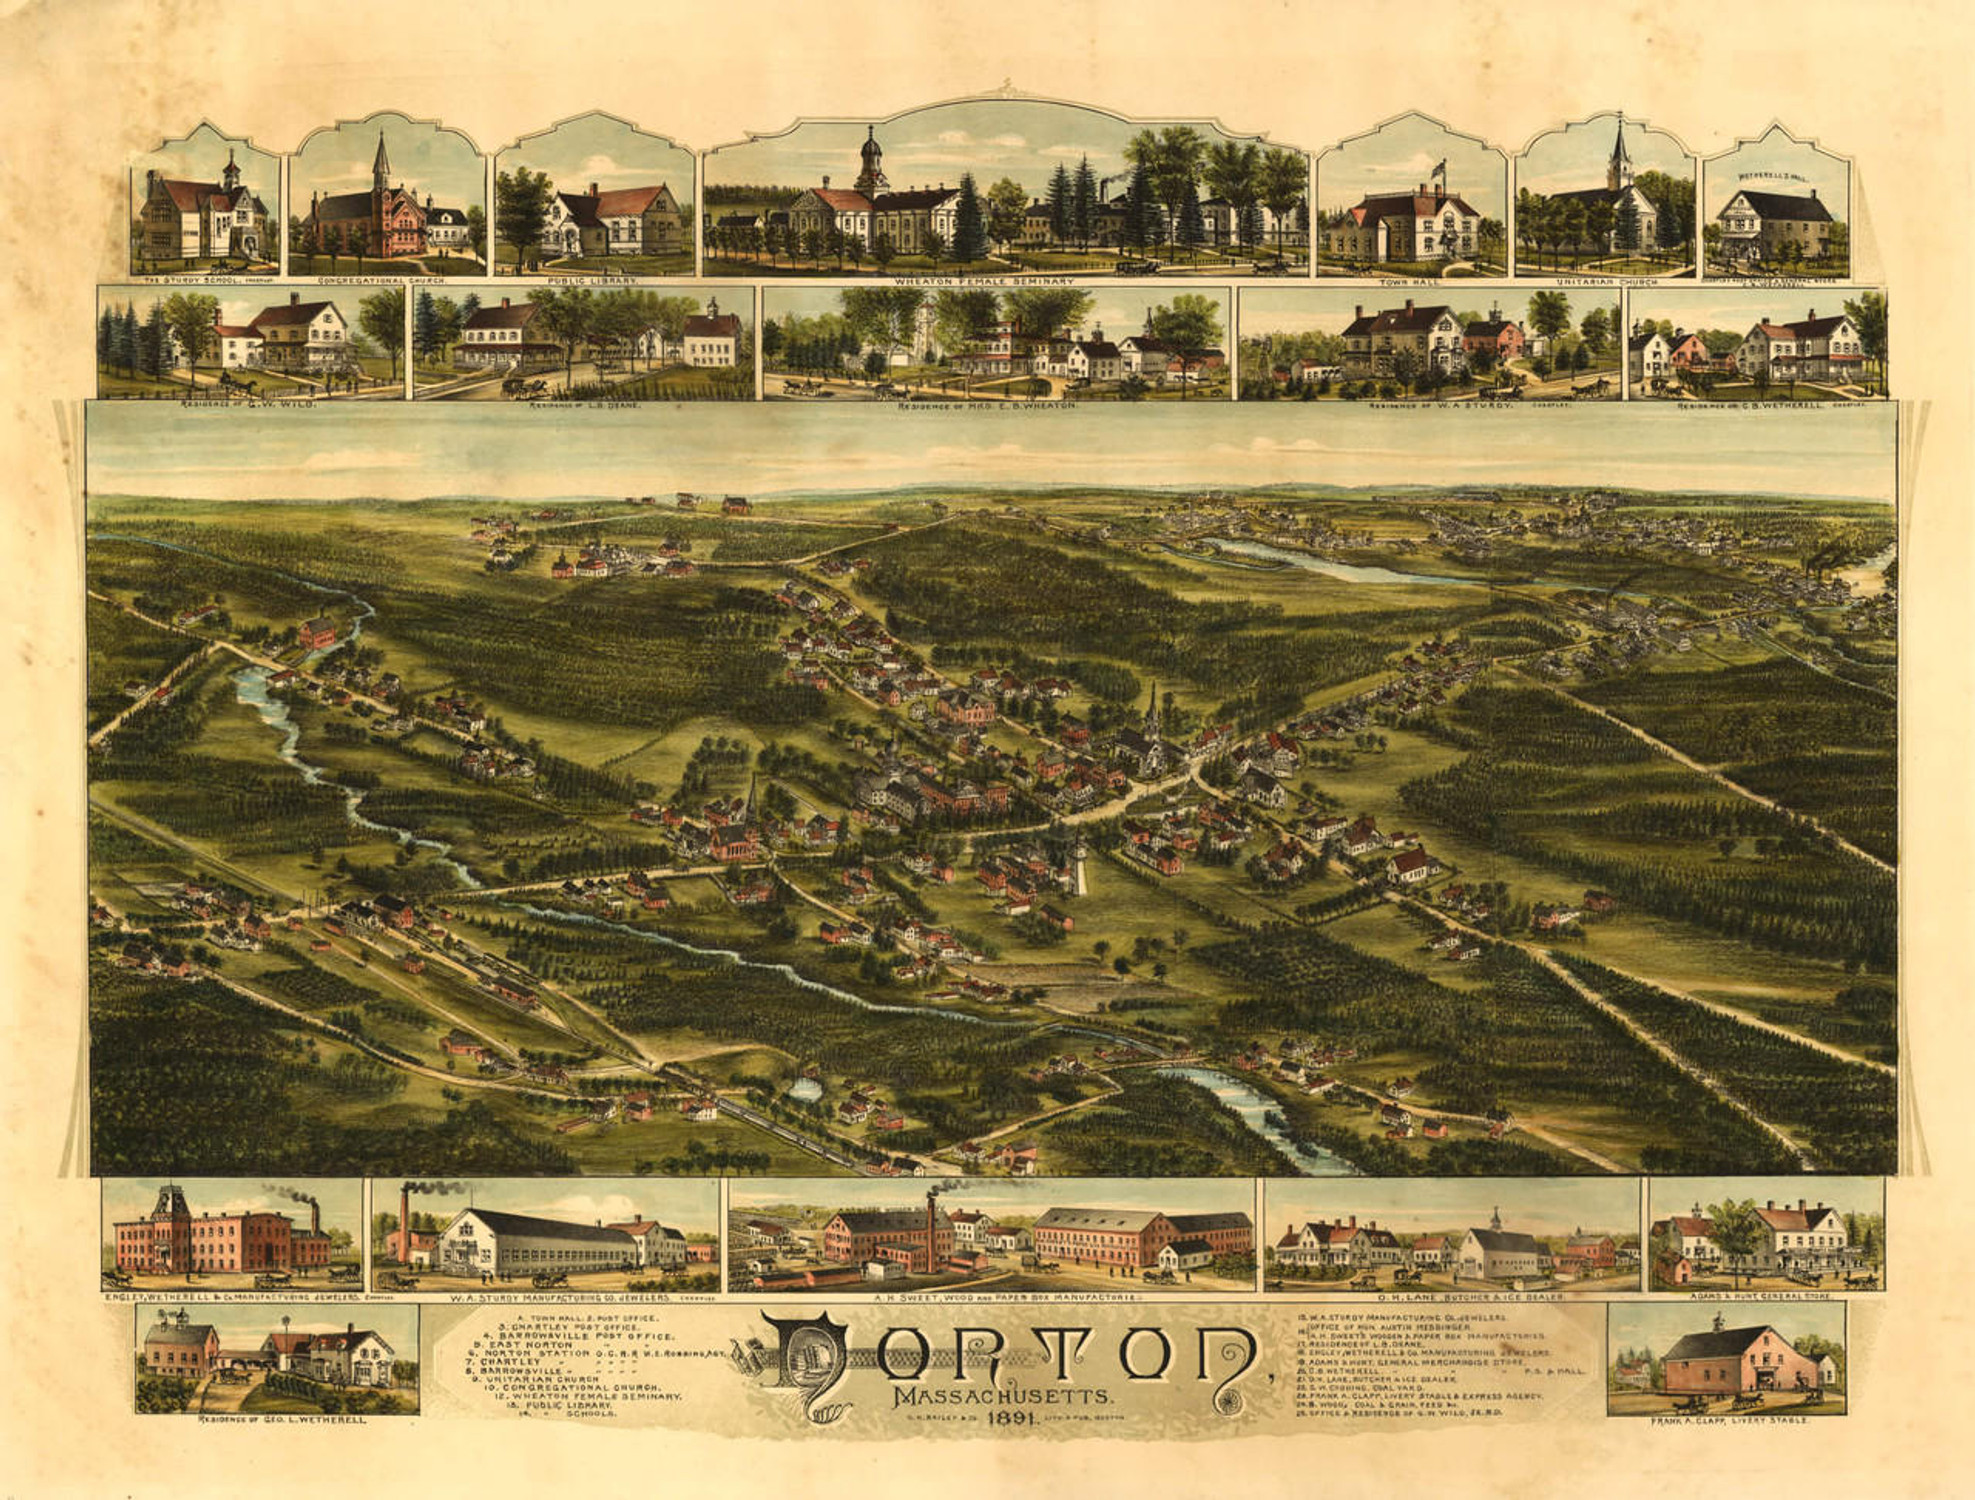 Historic Map - Norton, MA - 1891, image 1, World Maps Online